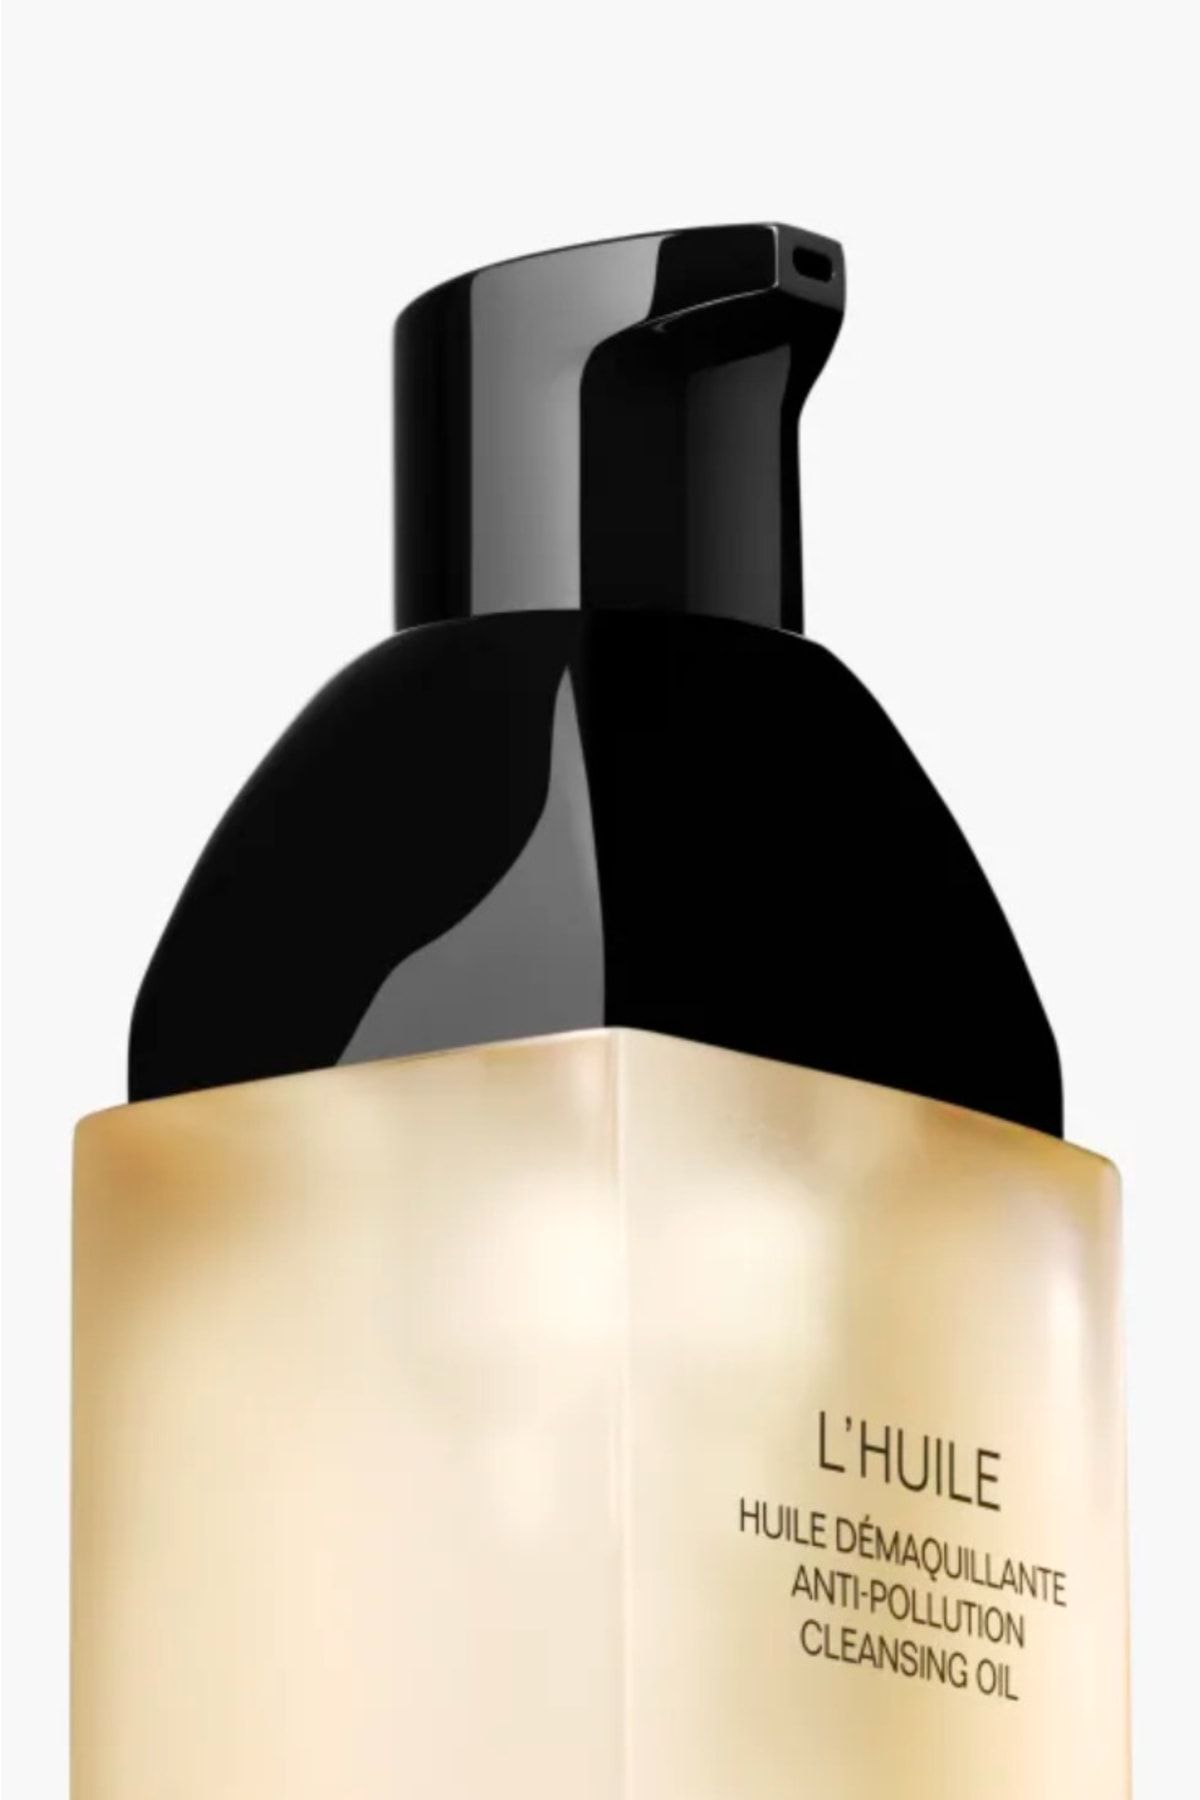 Chanel روغن پاک کننده آرایش L’huile حفظ و تقویت سد دفاعی پوست 150میل